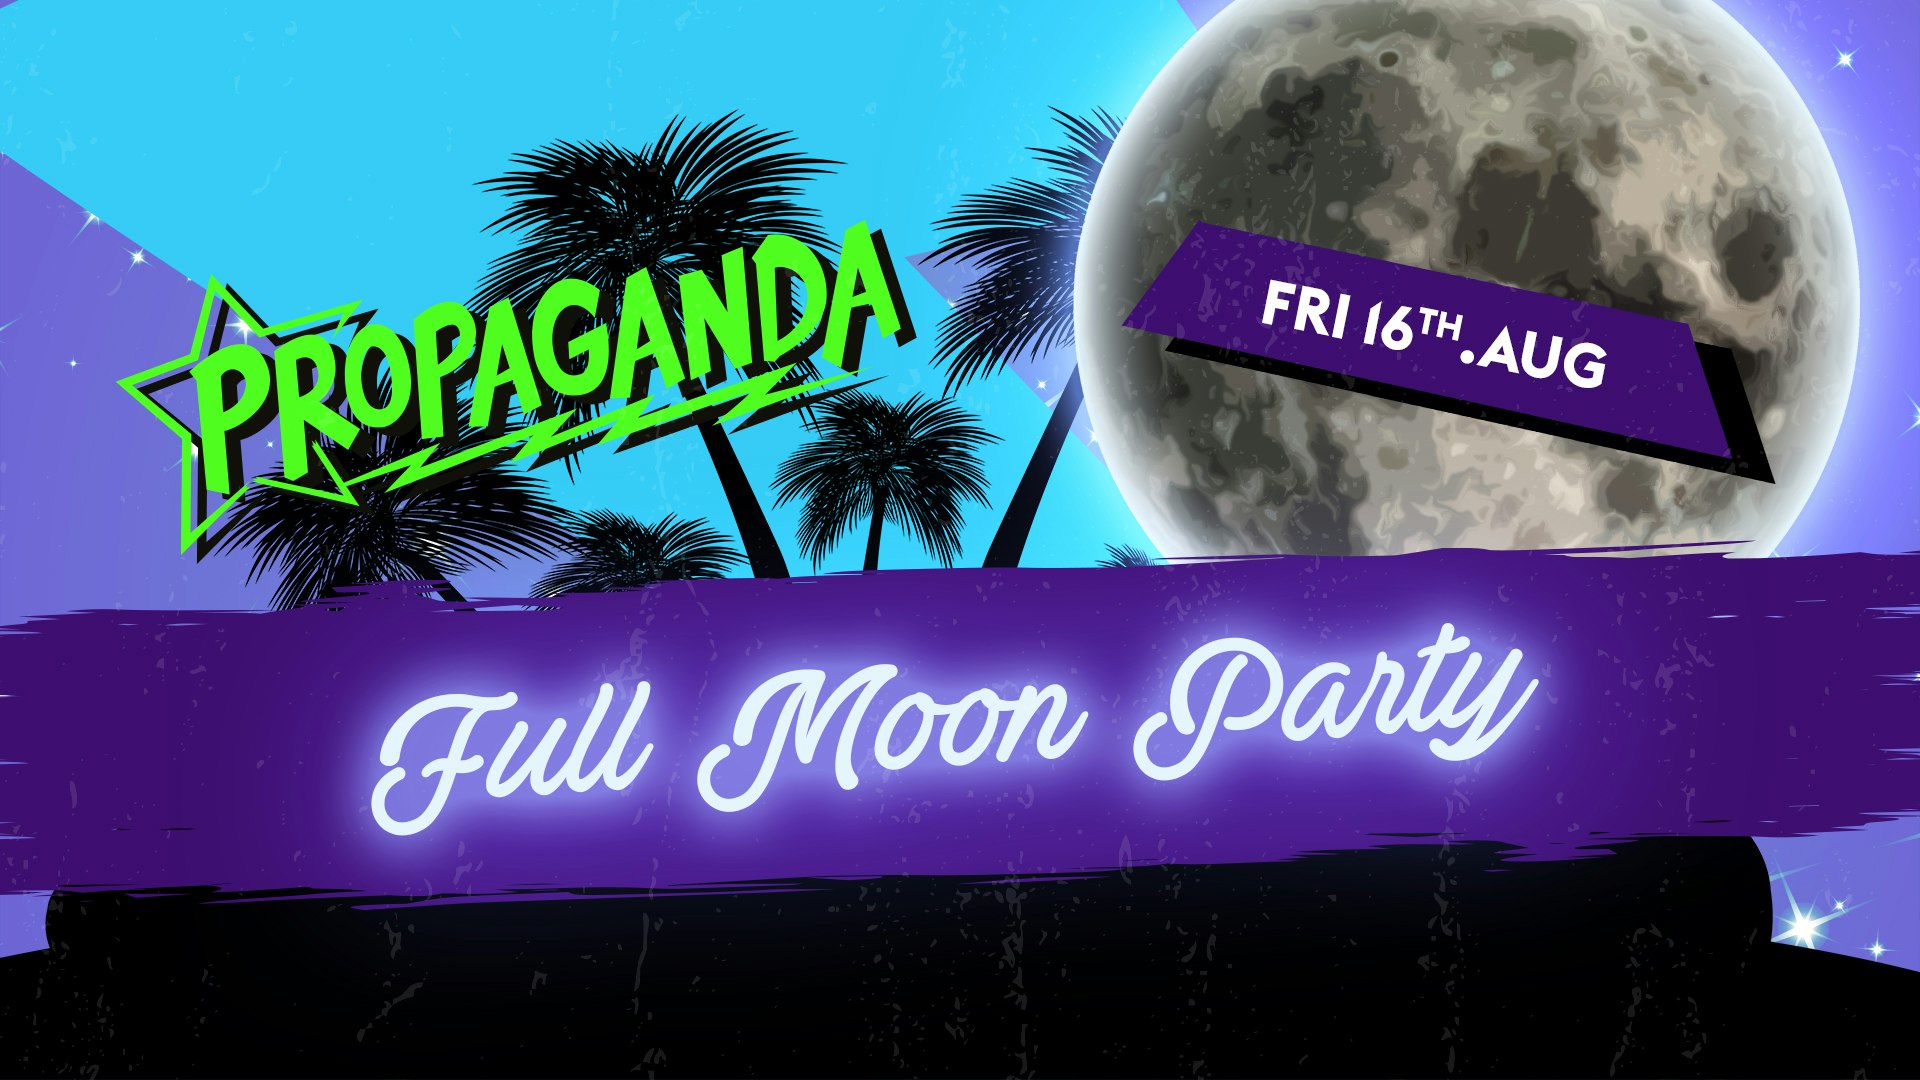 Propaganda Bath – Full Moon Party